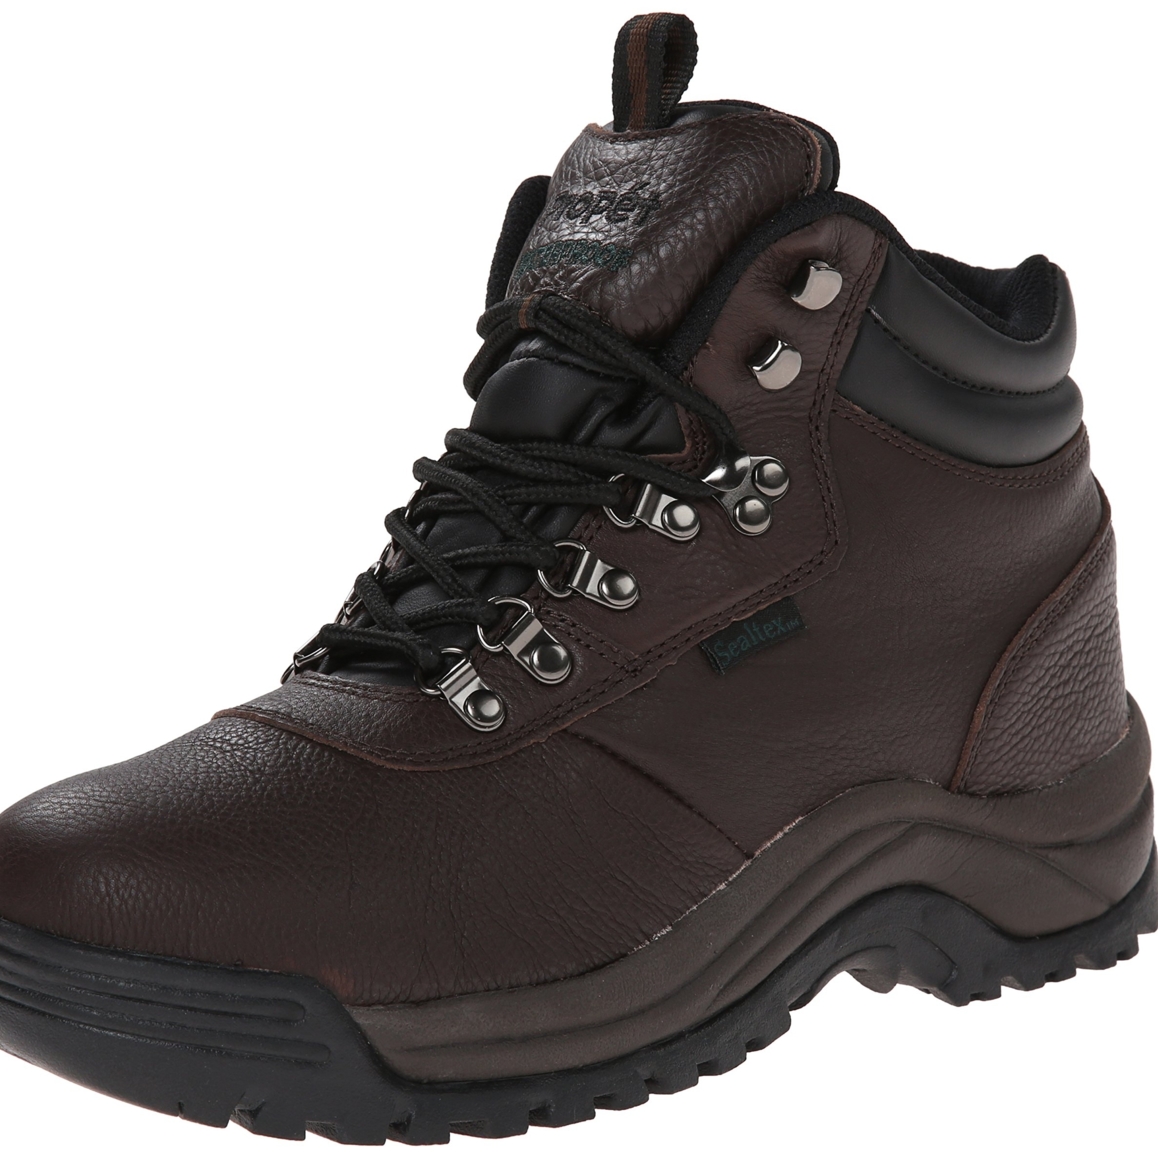 Propet Men's Cliff Walker Hiking Boot Bronco Brown - M3188BRO - BRONCO BROWN, 8-2E